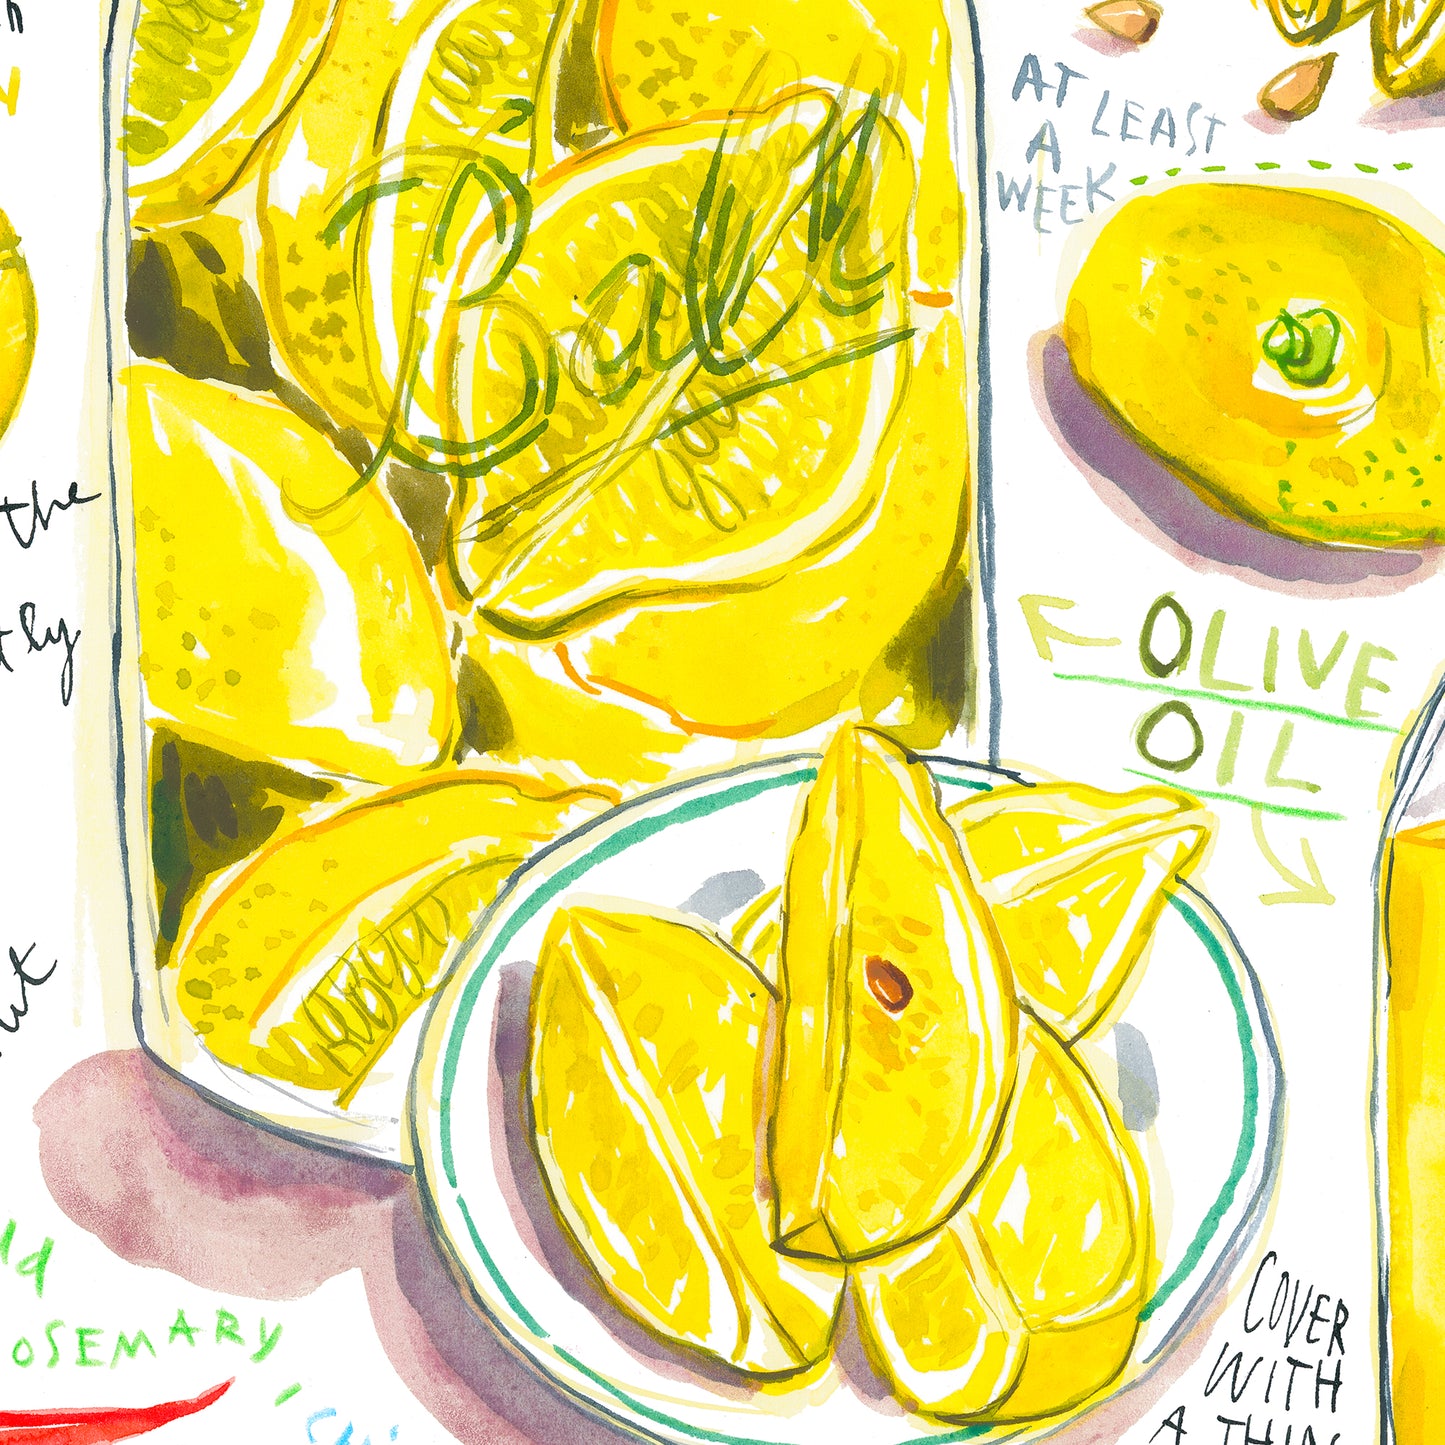 Preserved Lemon recipe